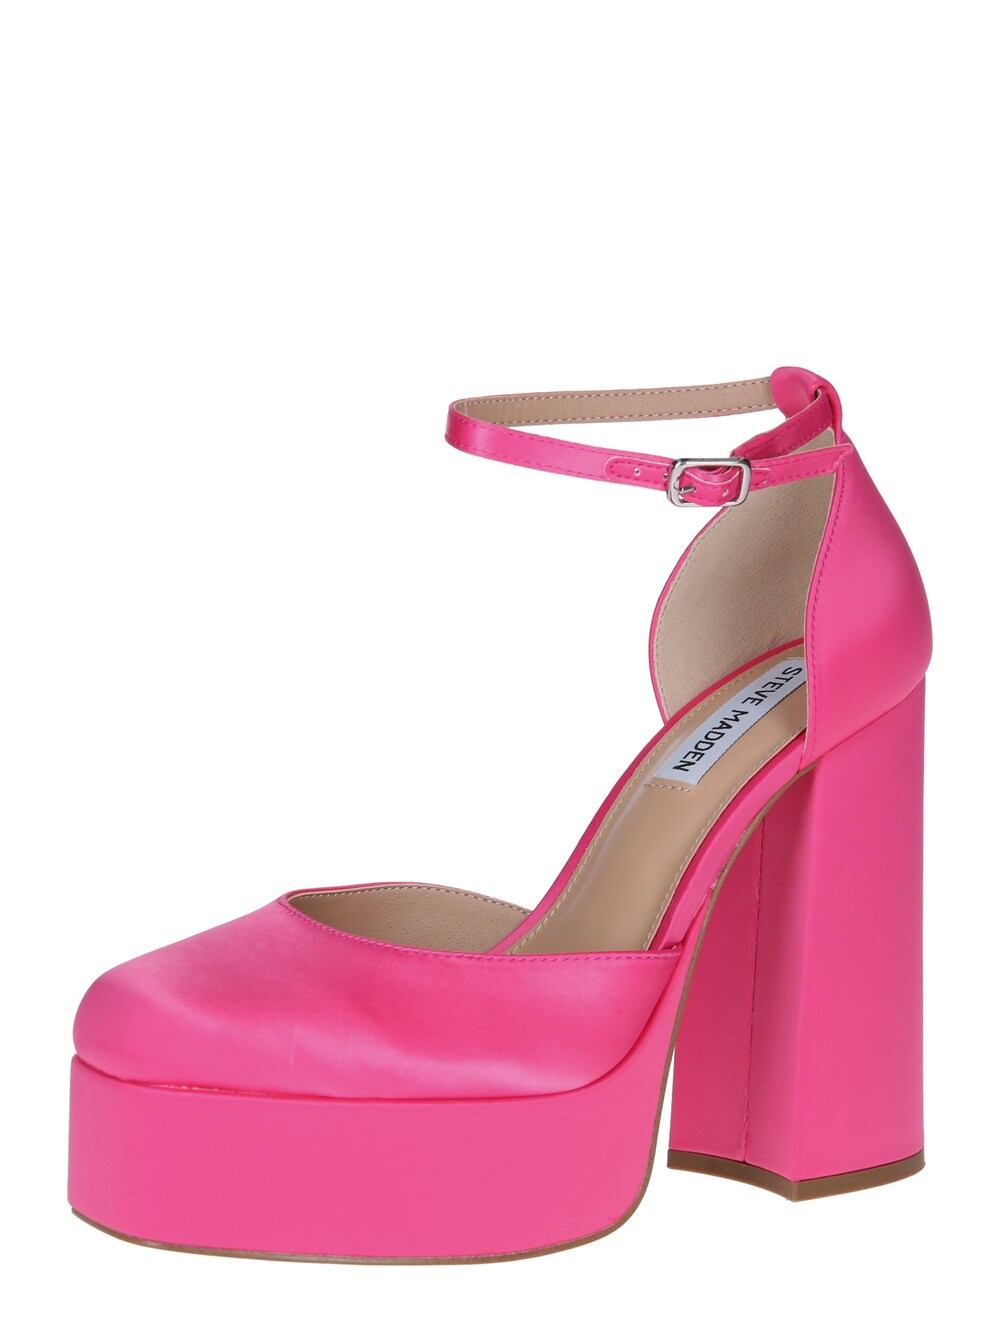 Туфли-лодочки с ремешком на пятке Steve Madden TAMY, светло-розовый